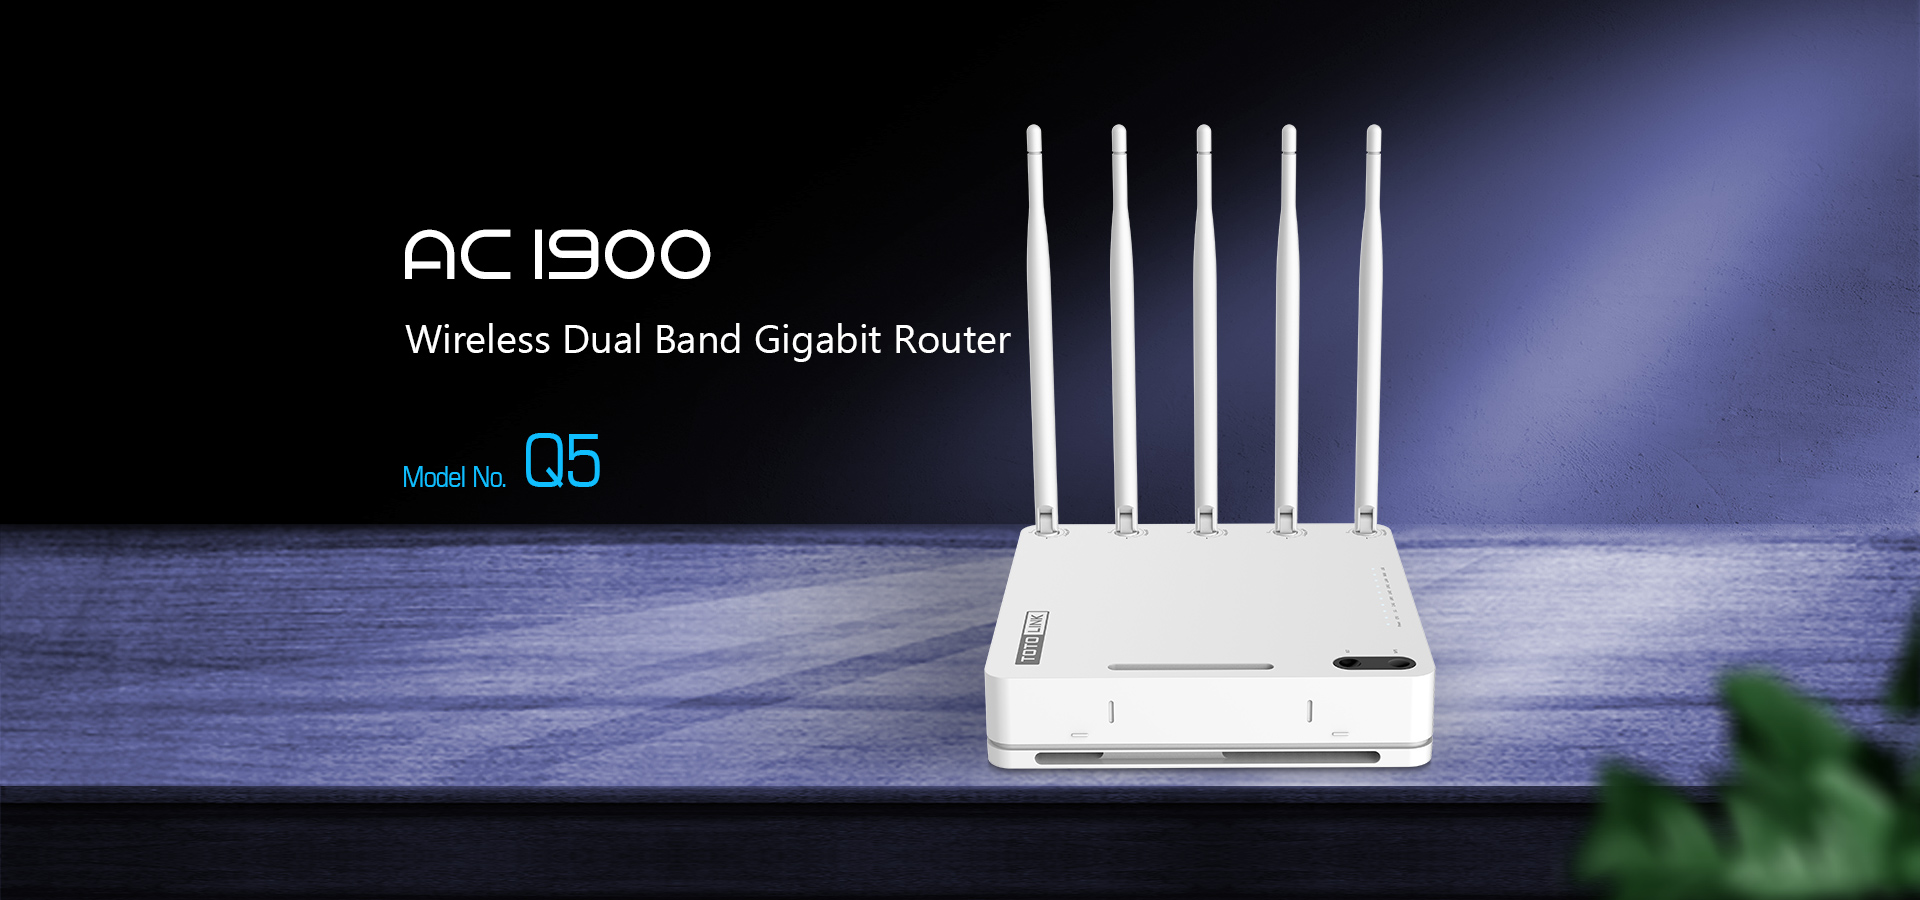 Q5-AC1900 Wireless Dual Band Gigabit Router